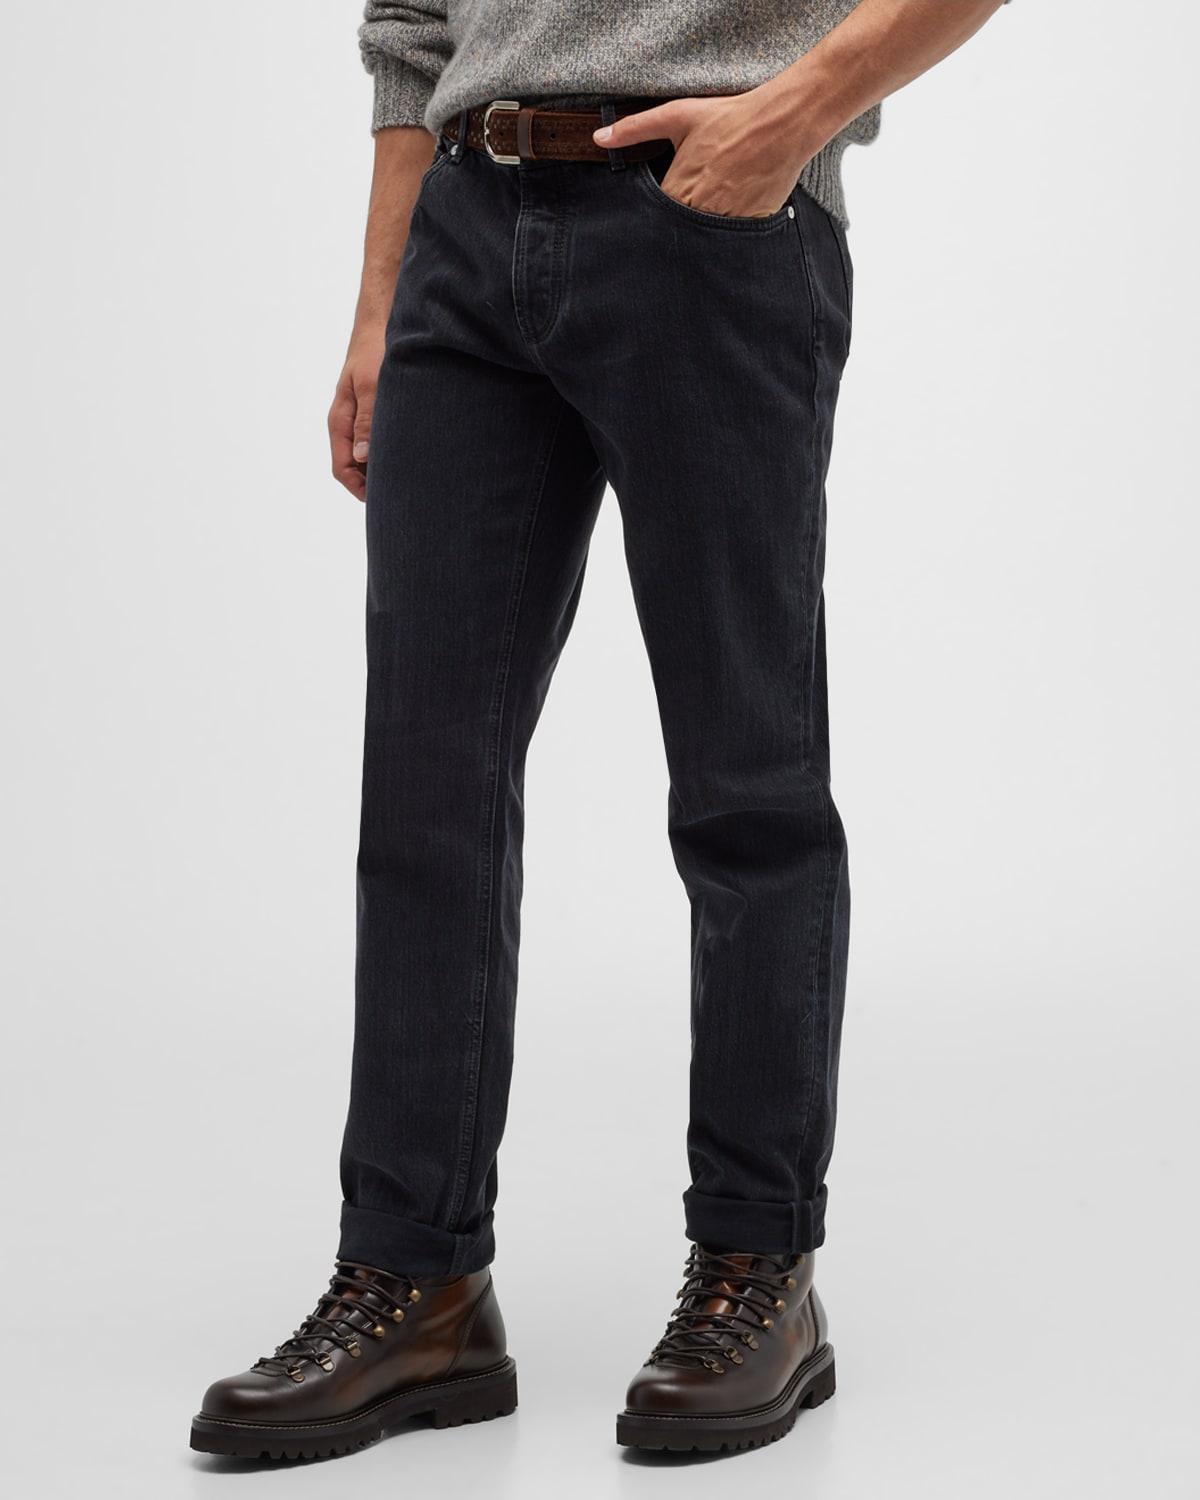 Brunello Cucinelli Men's Non-Stretch Denim Jeans - Size: 56R EU (44R US) - DARK GREY Product Image